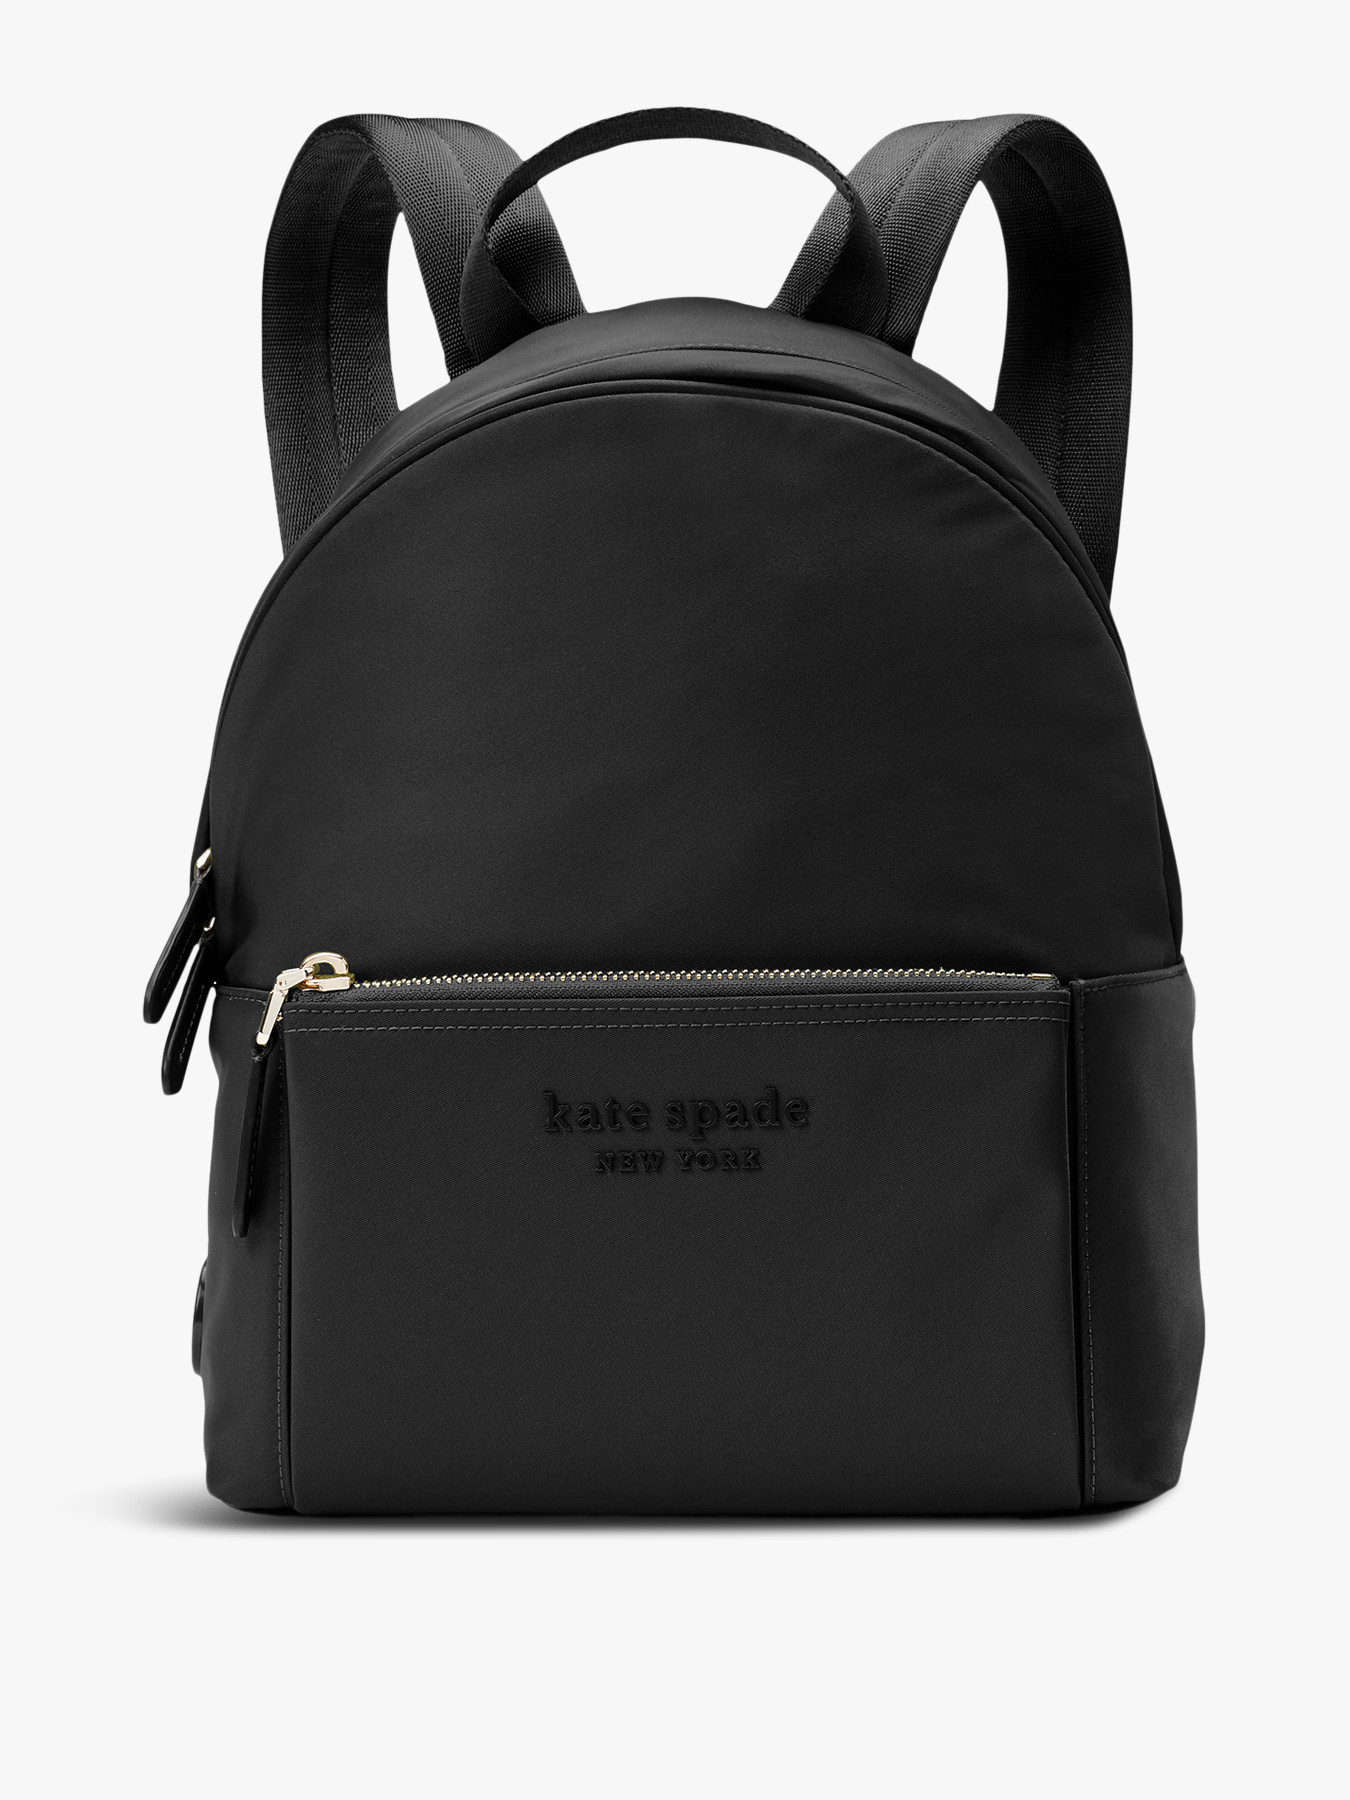 Women's Kate Spade New York Nylon City Medium Backpack | Fenwick